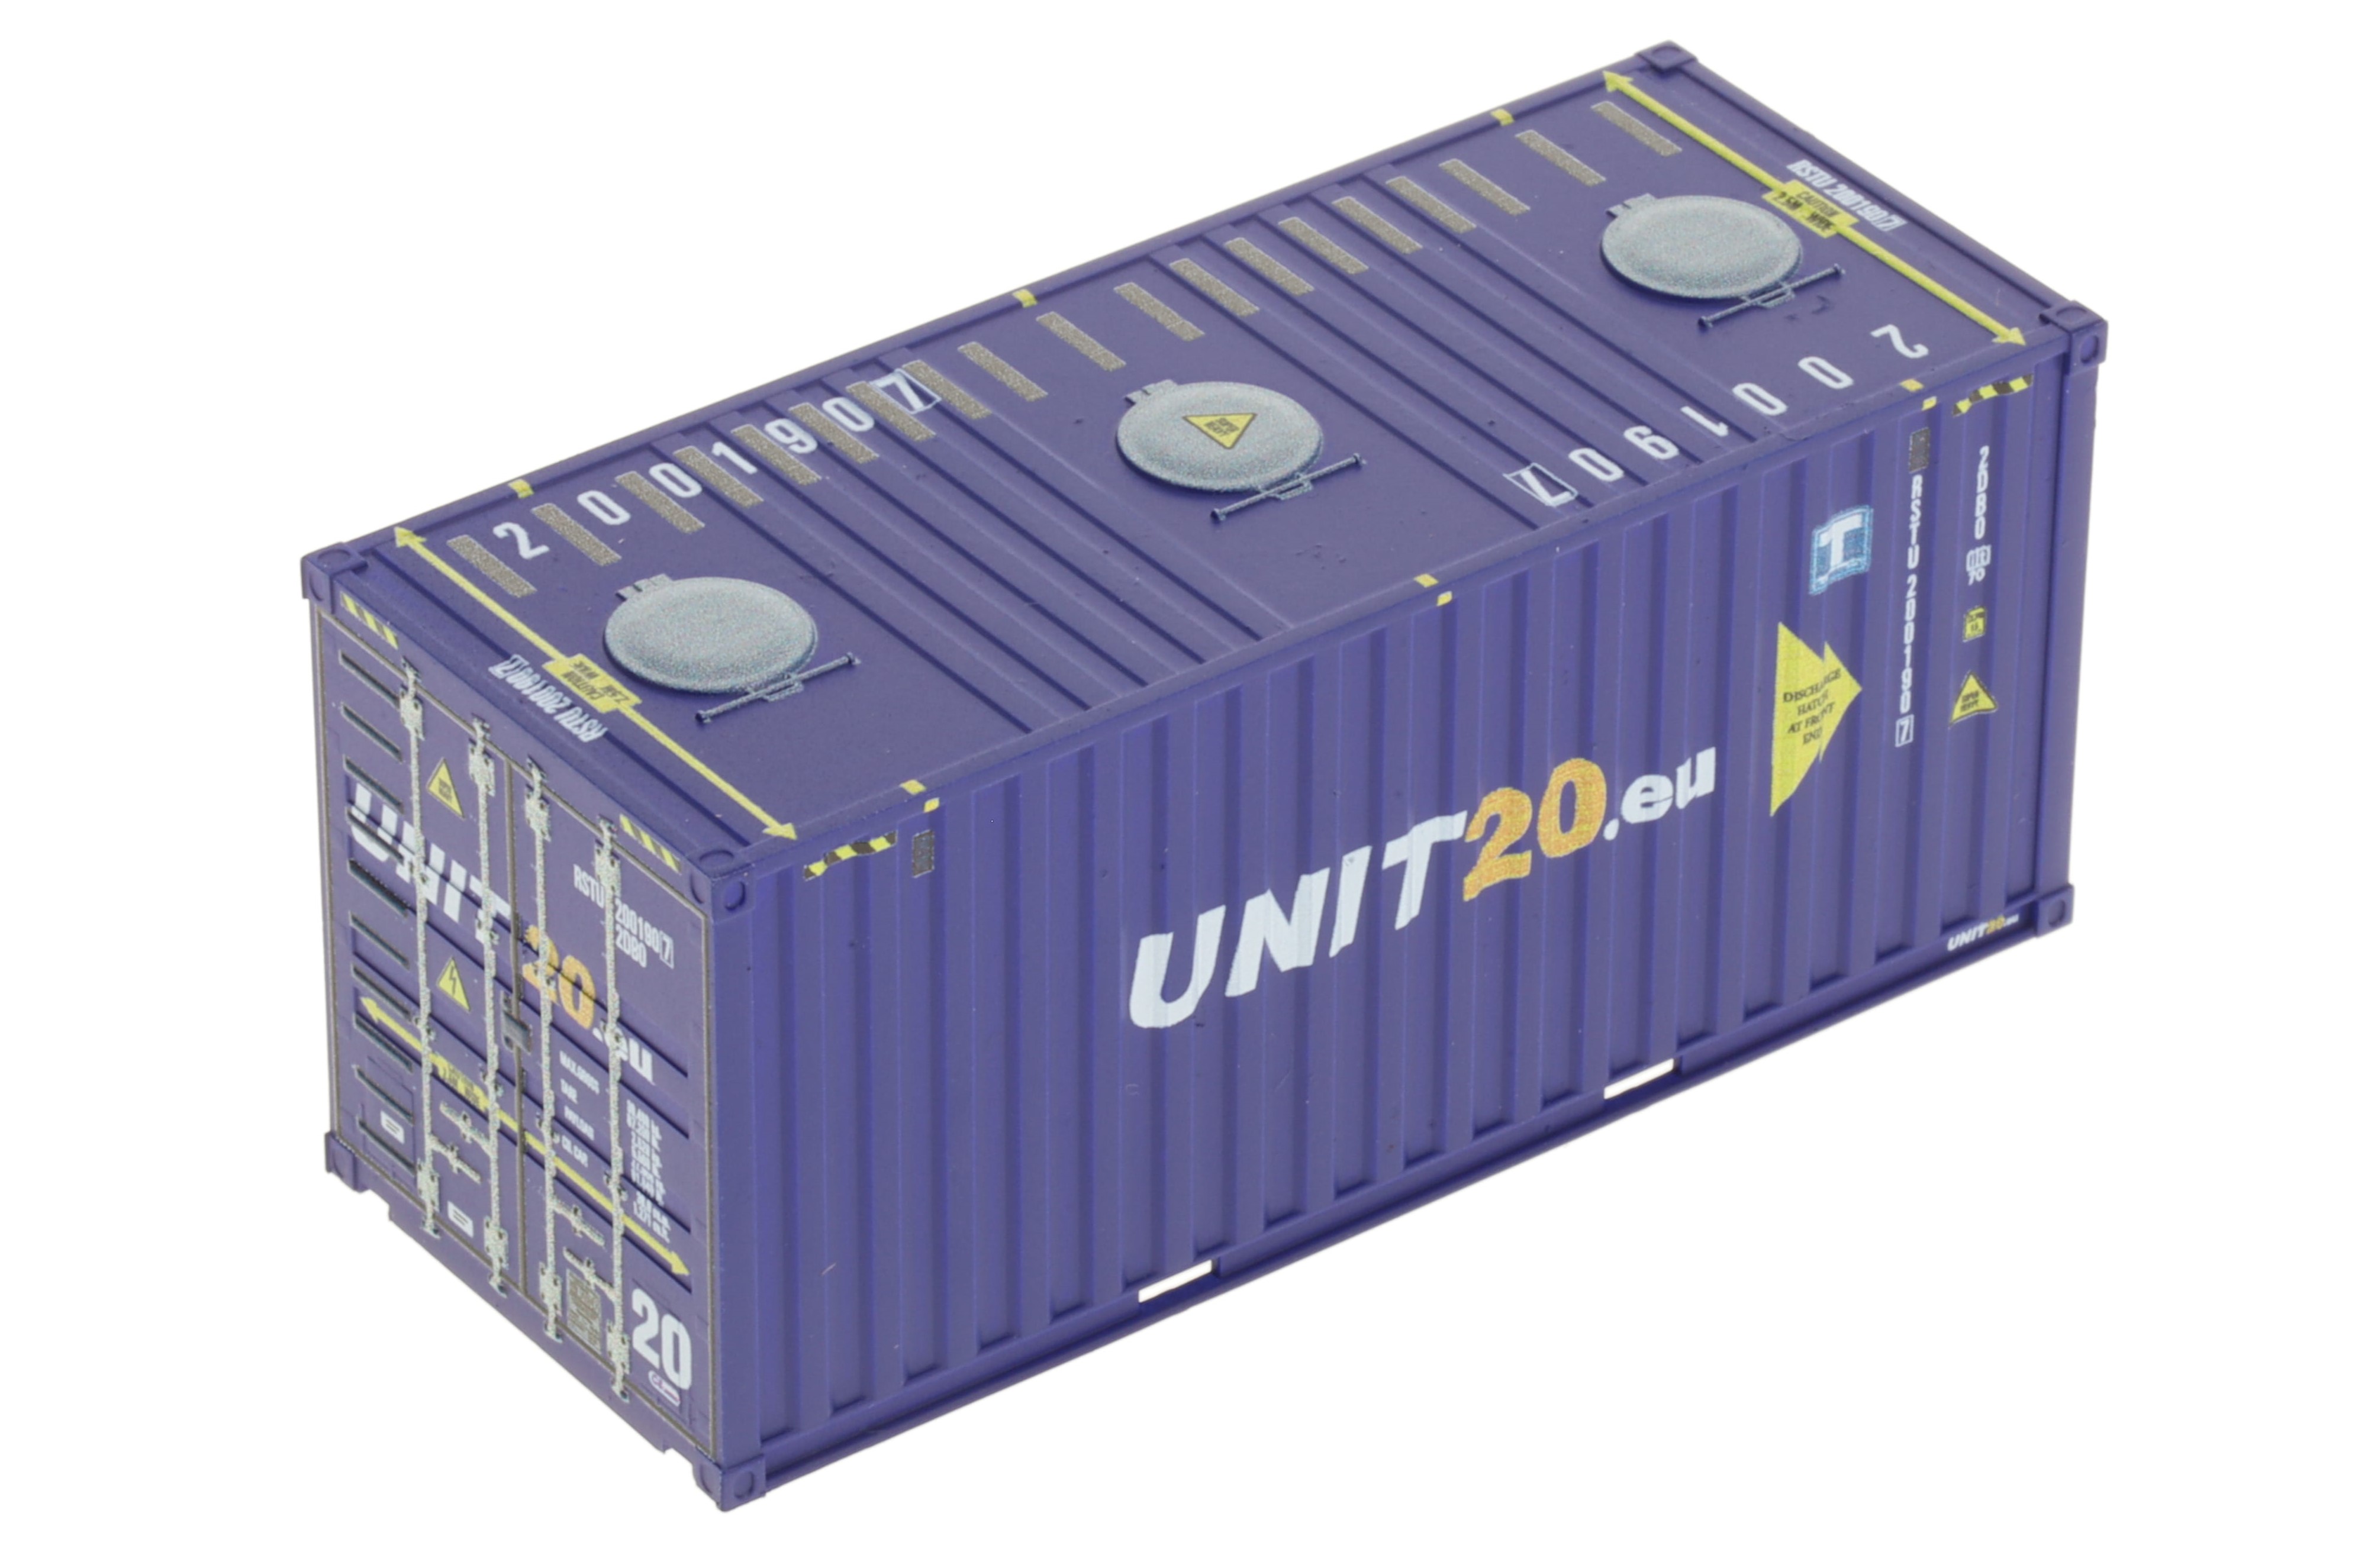 1:87 20´Bulk-Container UNIT20 blau, Behälternummer: RSTU 200190